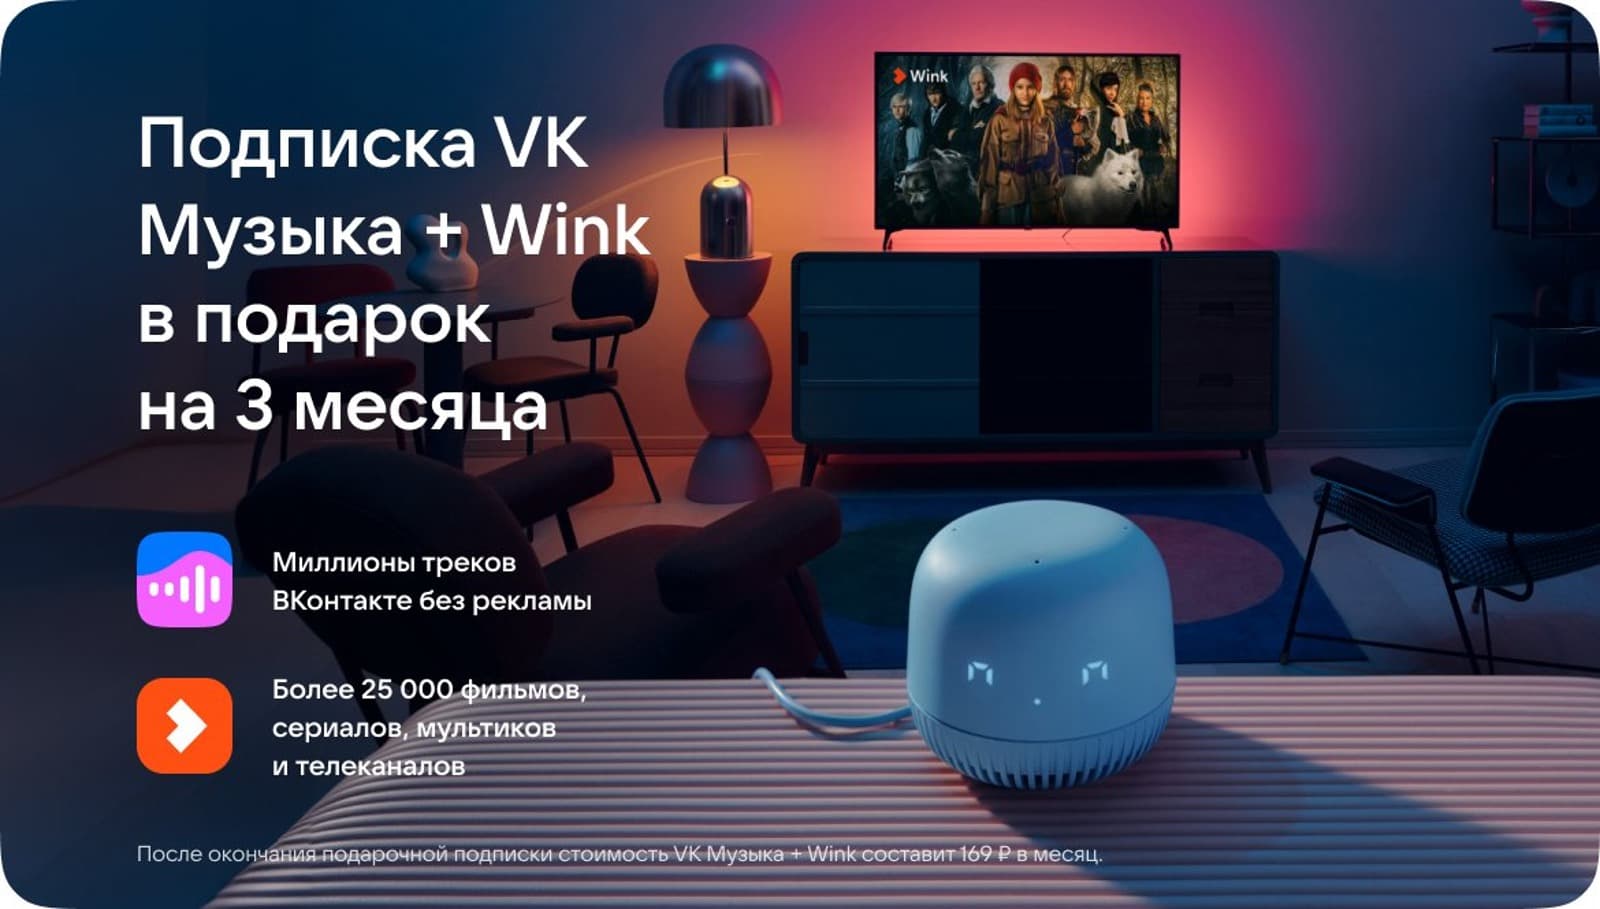 Подписка VK Музыка + Wink в подарок на 3 месяца.